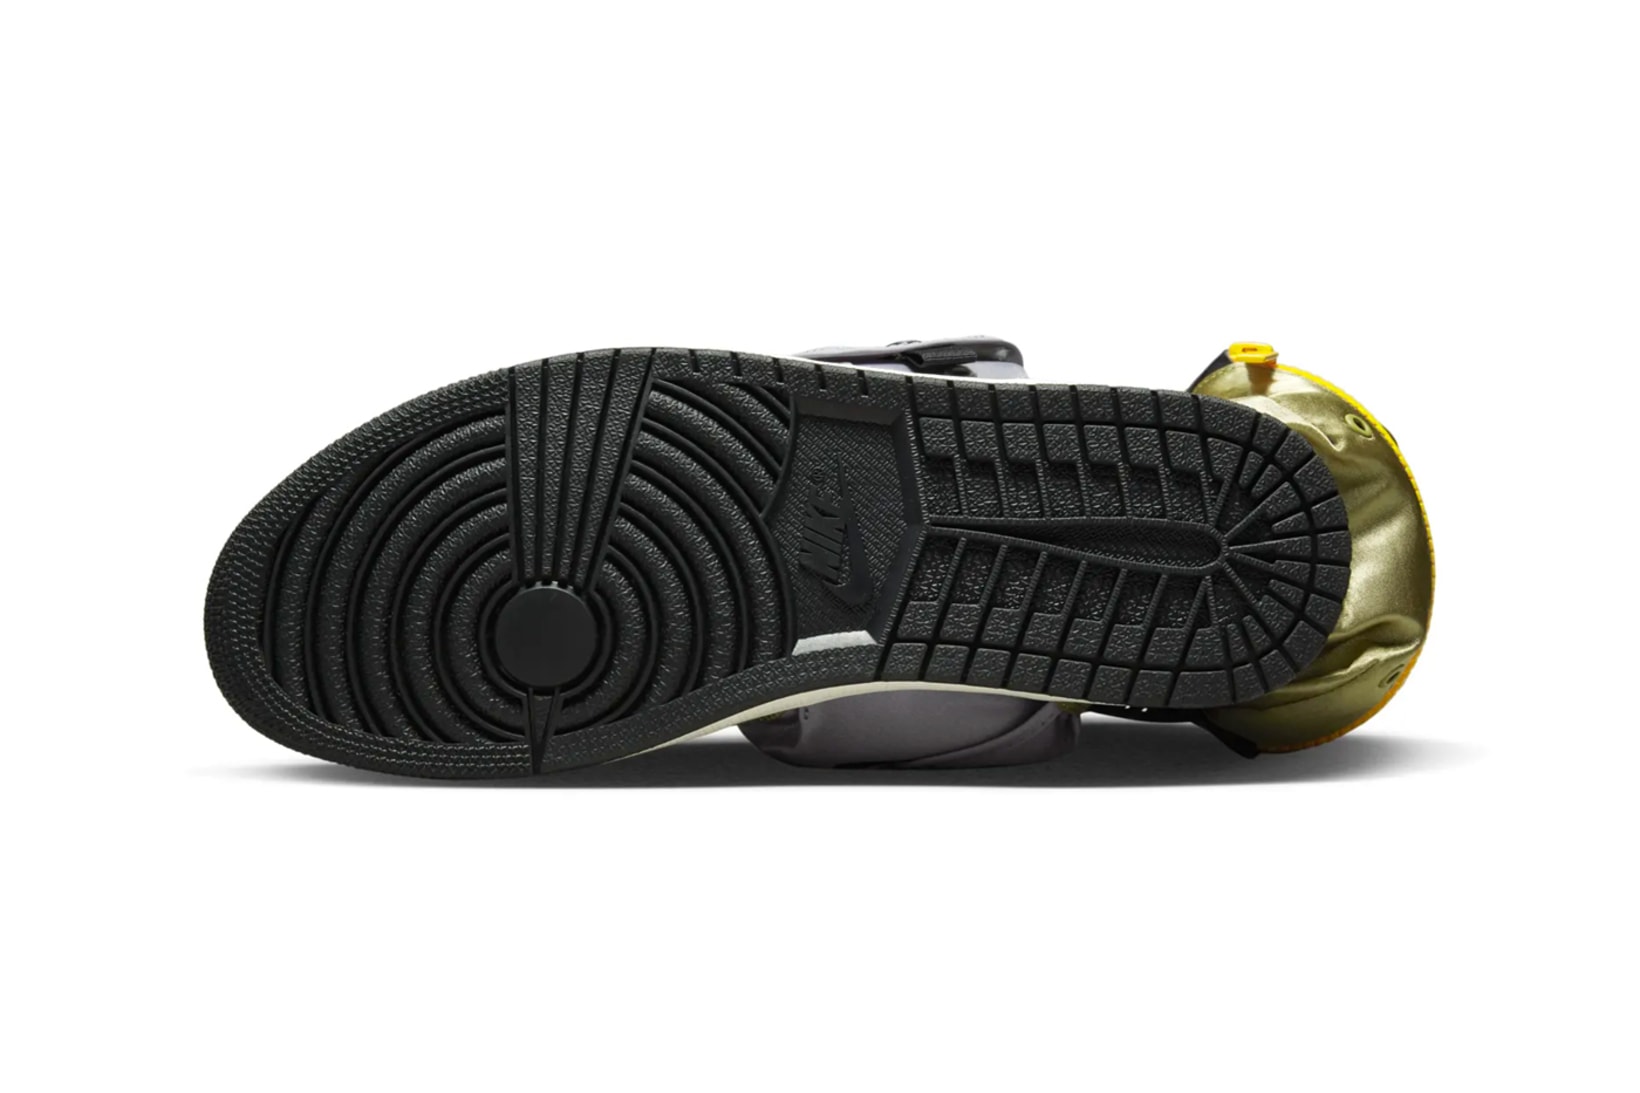 Nike Air Jordan 1 Utility “Neutral Olive” Release Info